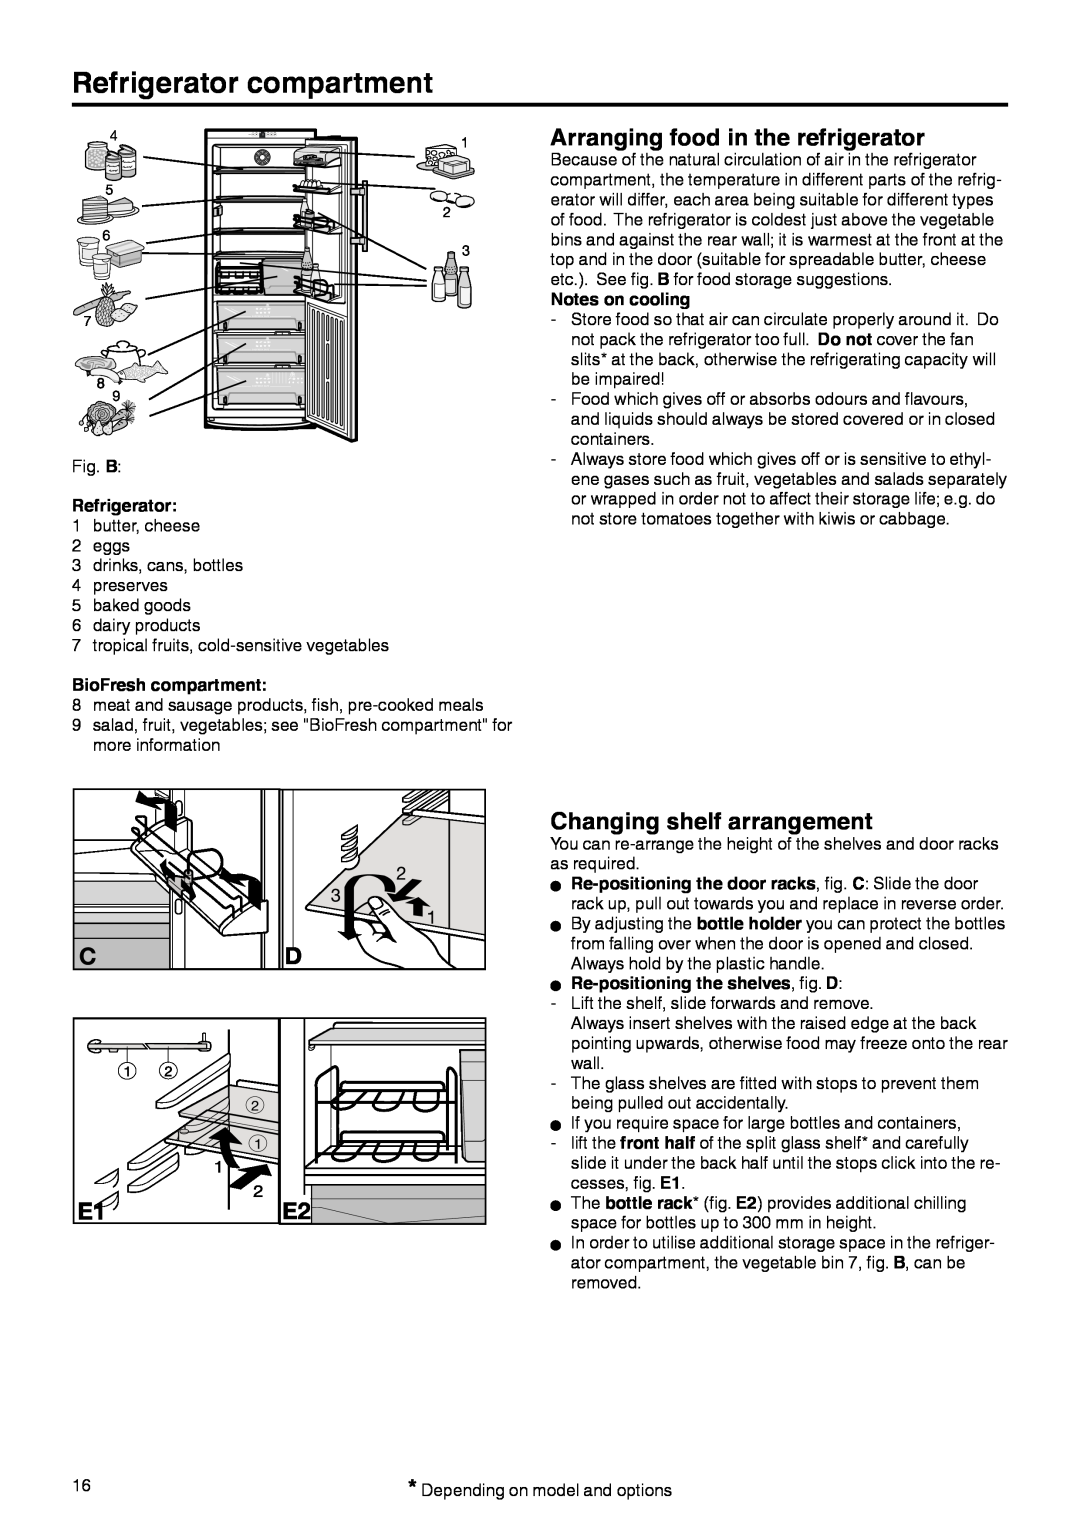 Liebherr 7082 212-02 manual Refrigerator compartment, Arranging food in the refrigerator, Changing shelf arrangement 